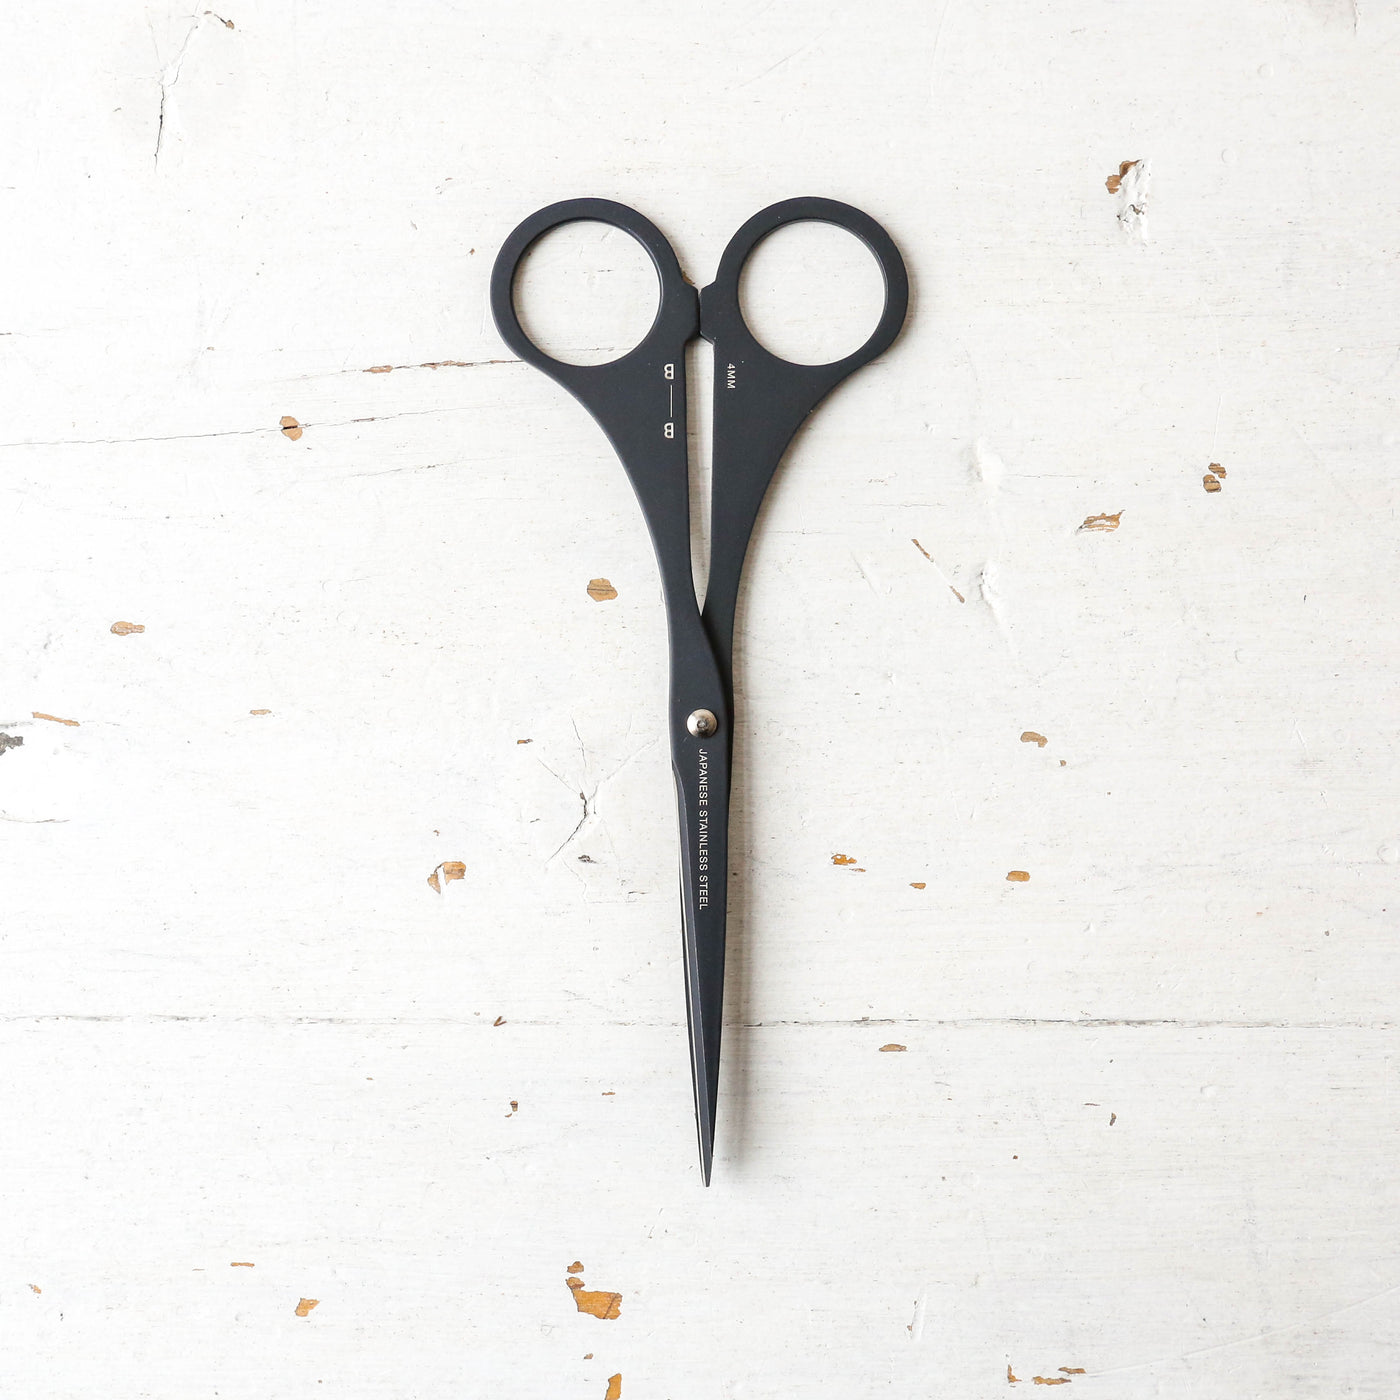 Japanese Steel Everyday Slim Scissors - Coated